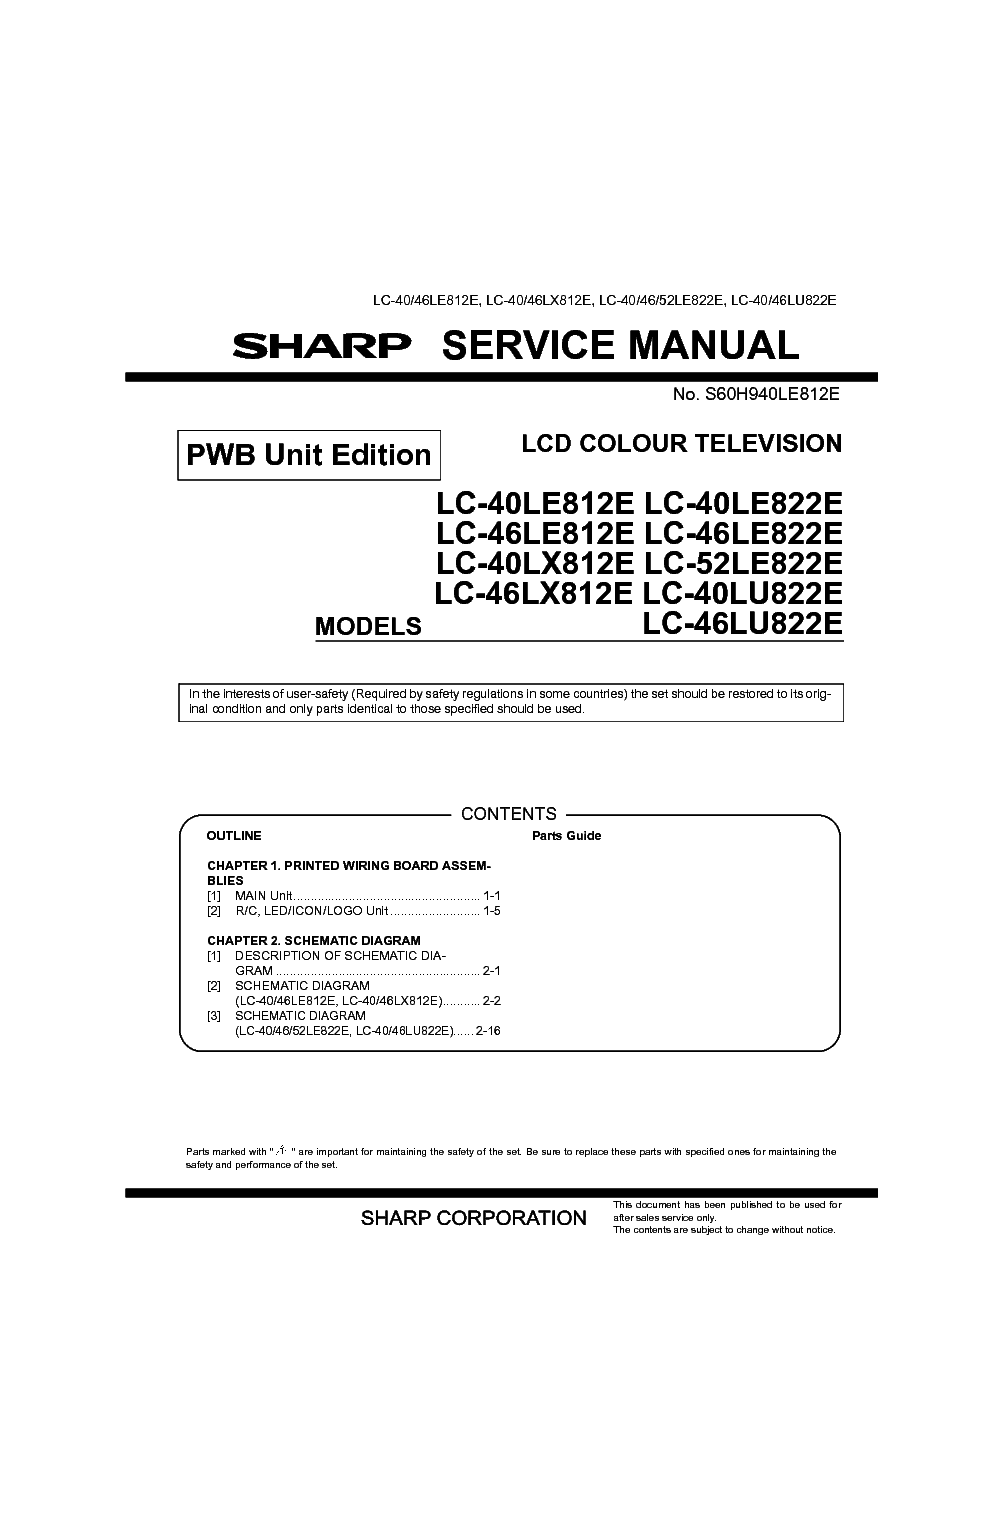 SHARP LC-40LE812E 40LE822E 46LE812E 46LE822E 40LX812E 52LE822E 46LX812E 40LU822E 46LU822E service manual (1st page)